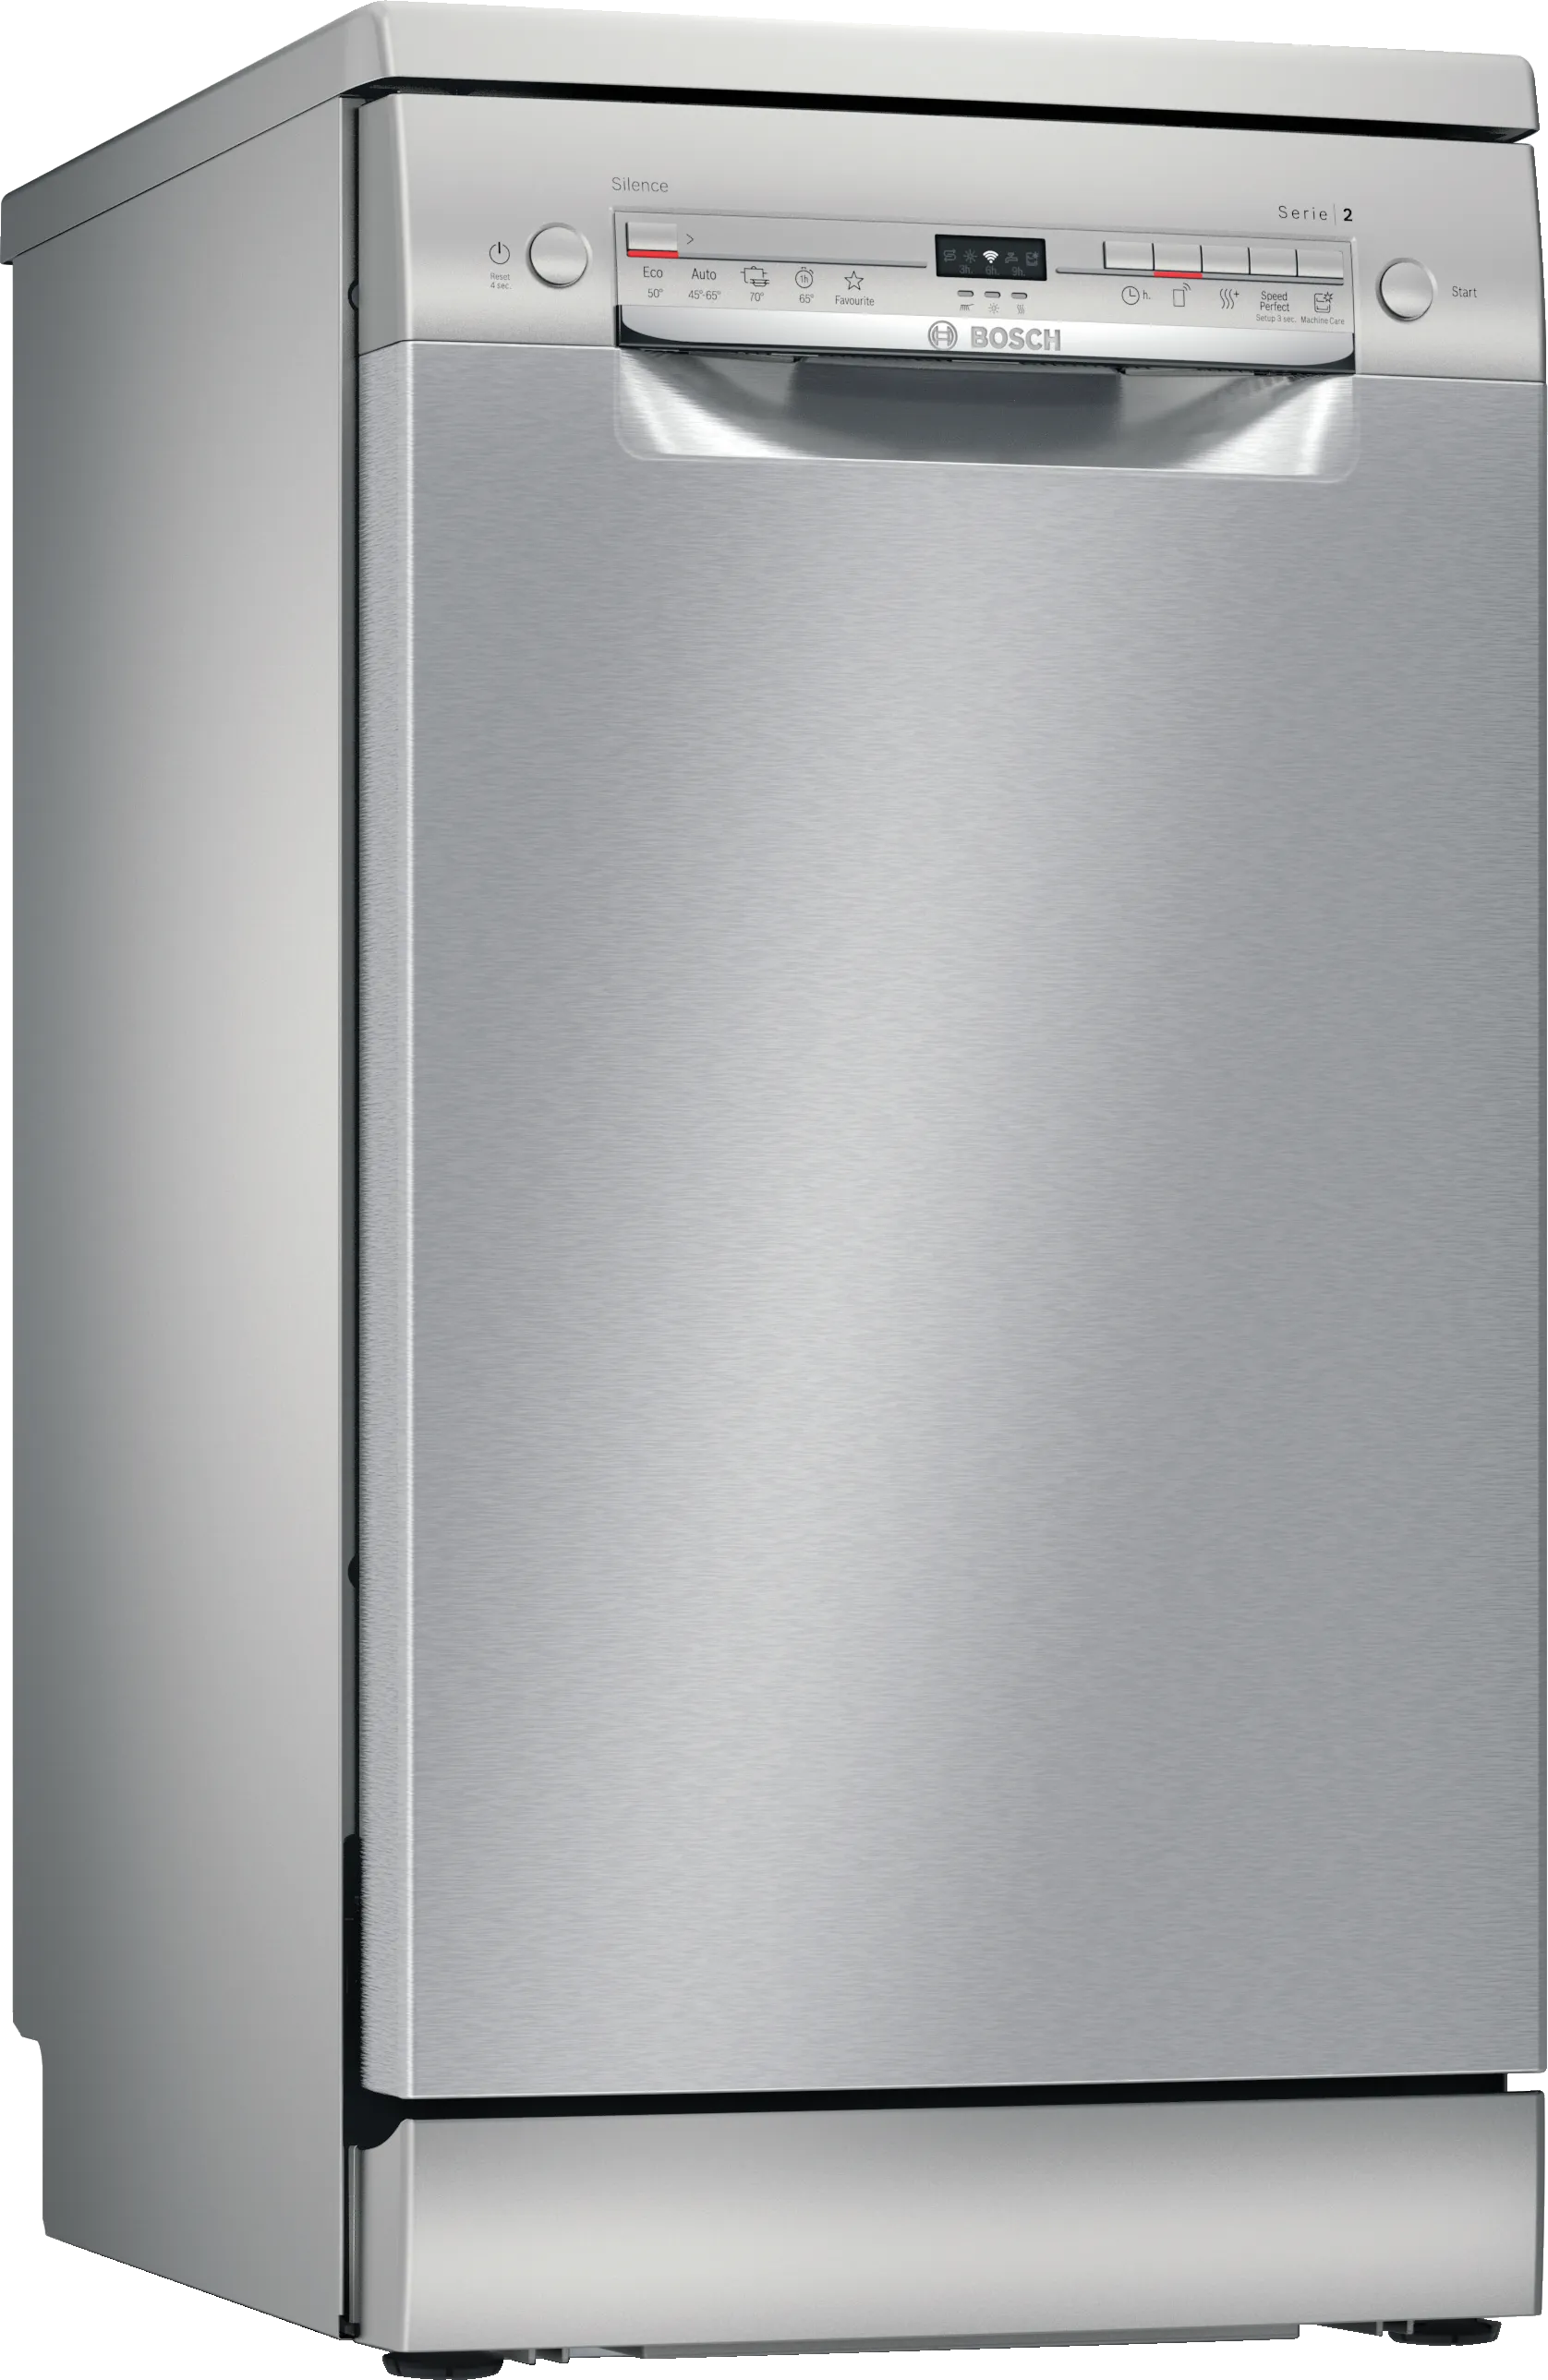 Series 2 free-standing dishwasher 45 cm Brushed steel anti-fingerprint 